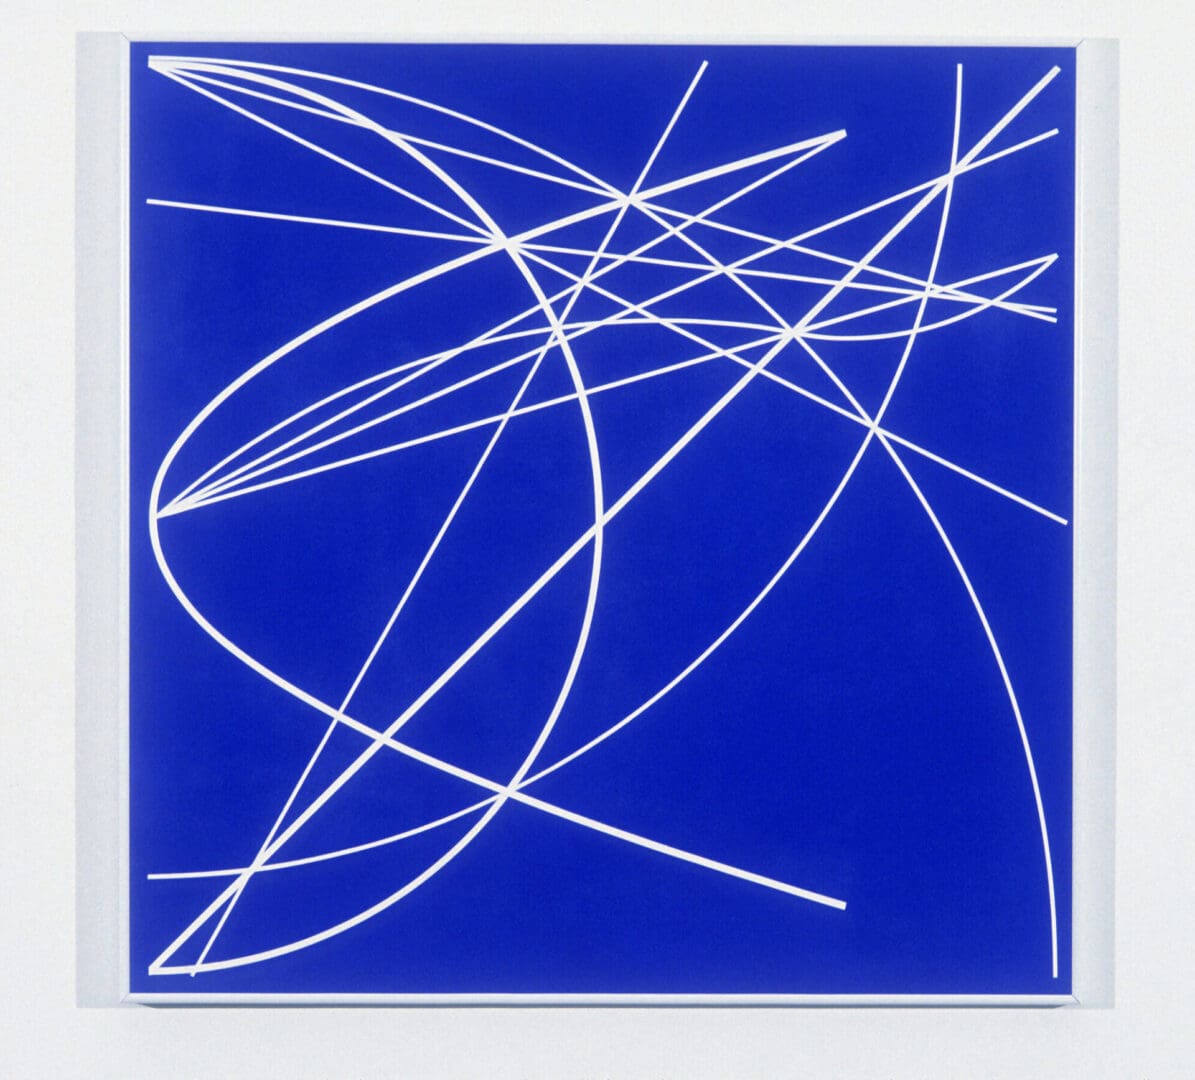 Clifford Singer. Half Sphere with Shadow. 1997. Acrylic on Plexiglas. 36 x 36 inches